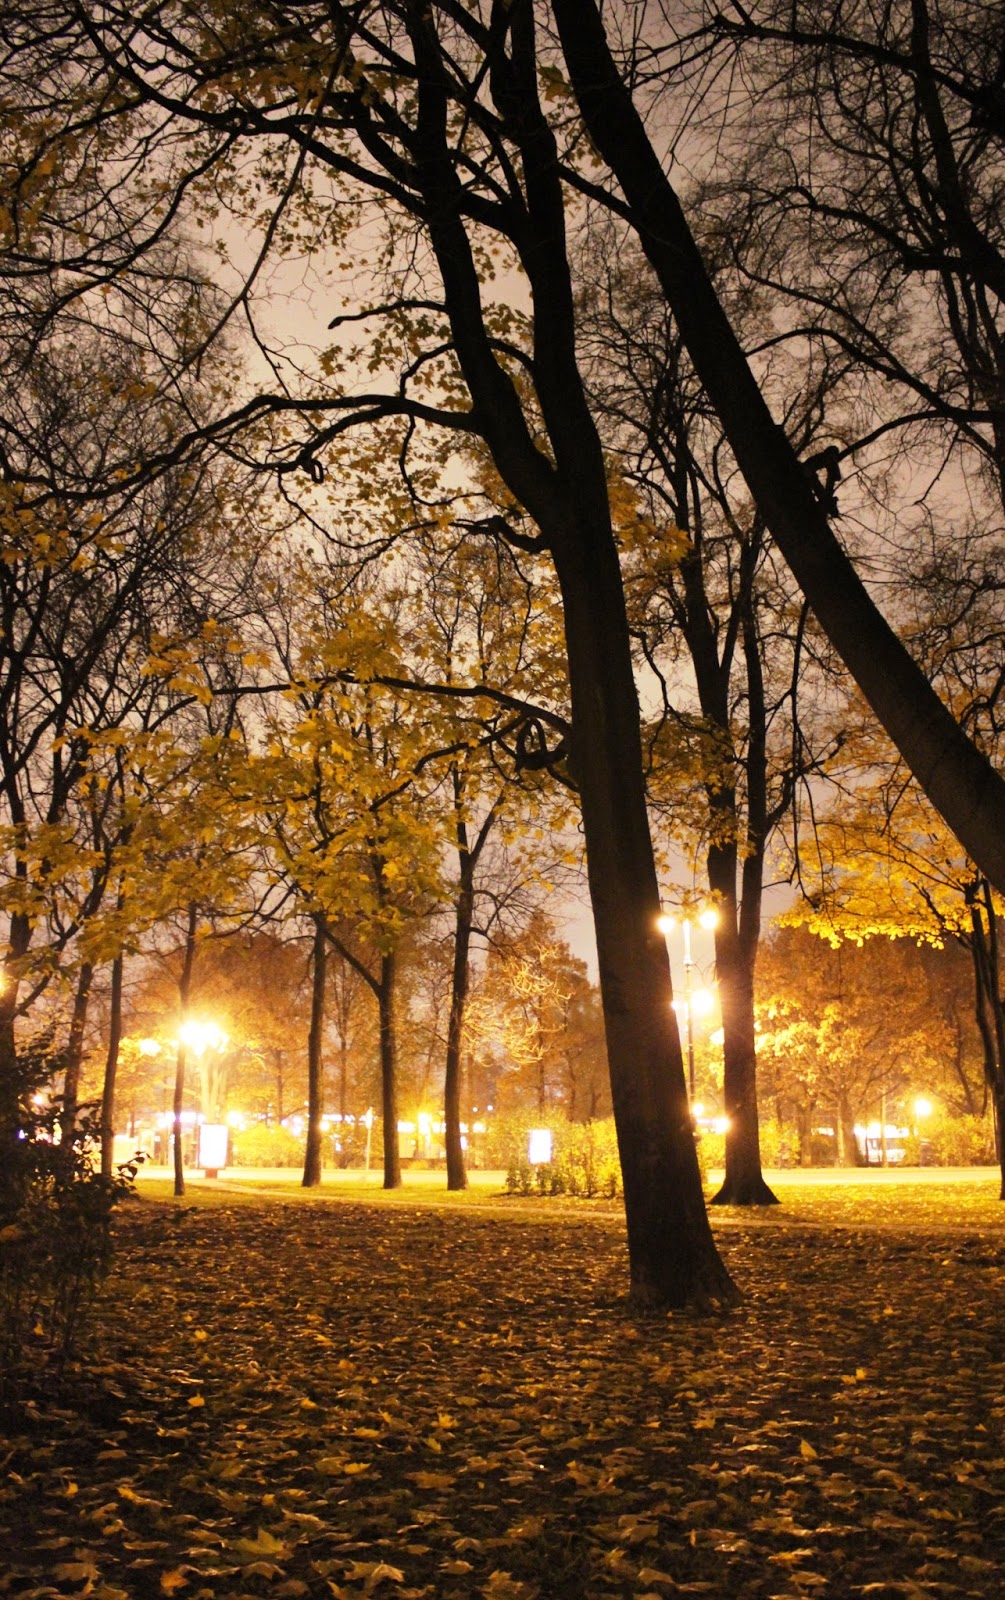 Осенний вечер октября. Осенний вечер. Ночной осенний парк. Осень вечер парк. Осенний парк вечером.